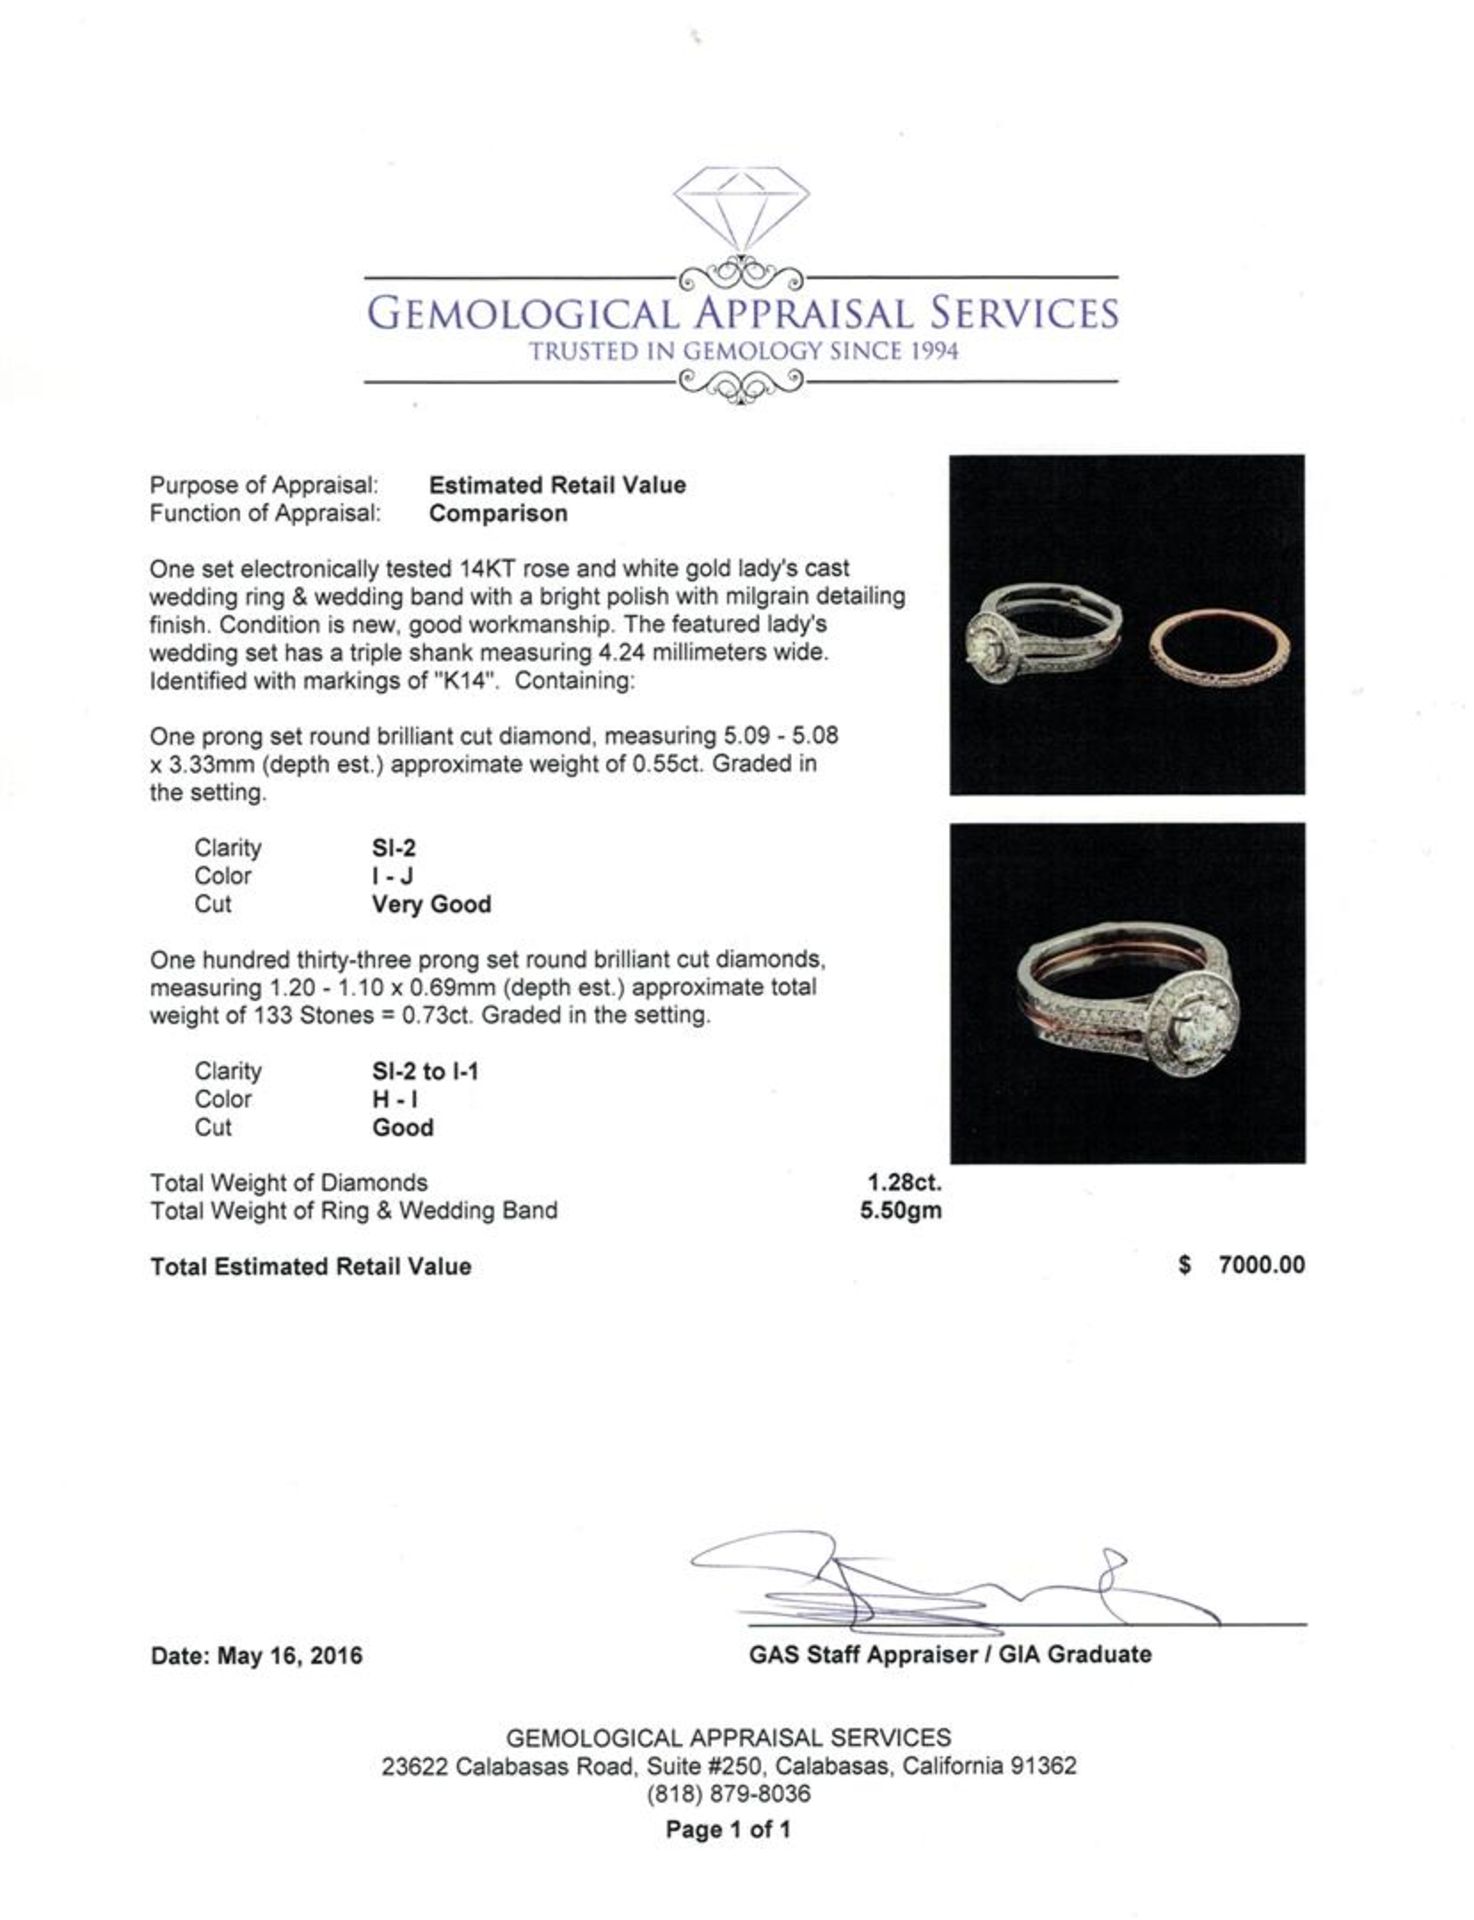 1.28 ctw Diamond Wedding Ring Set - 14KT Rose and White Gold - Image 4 of 4